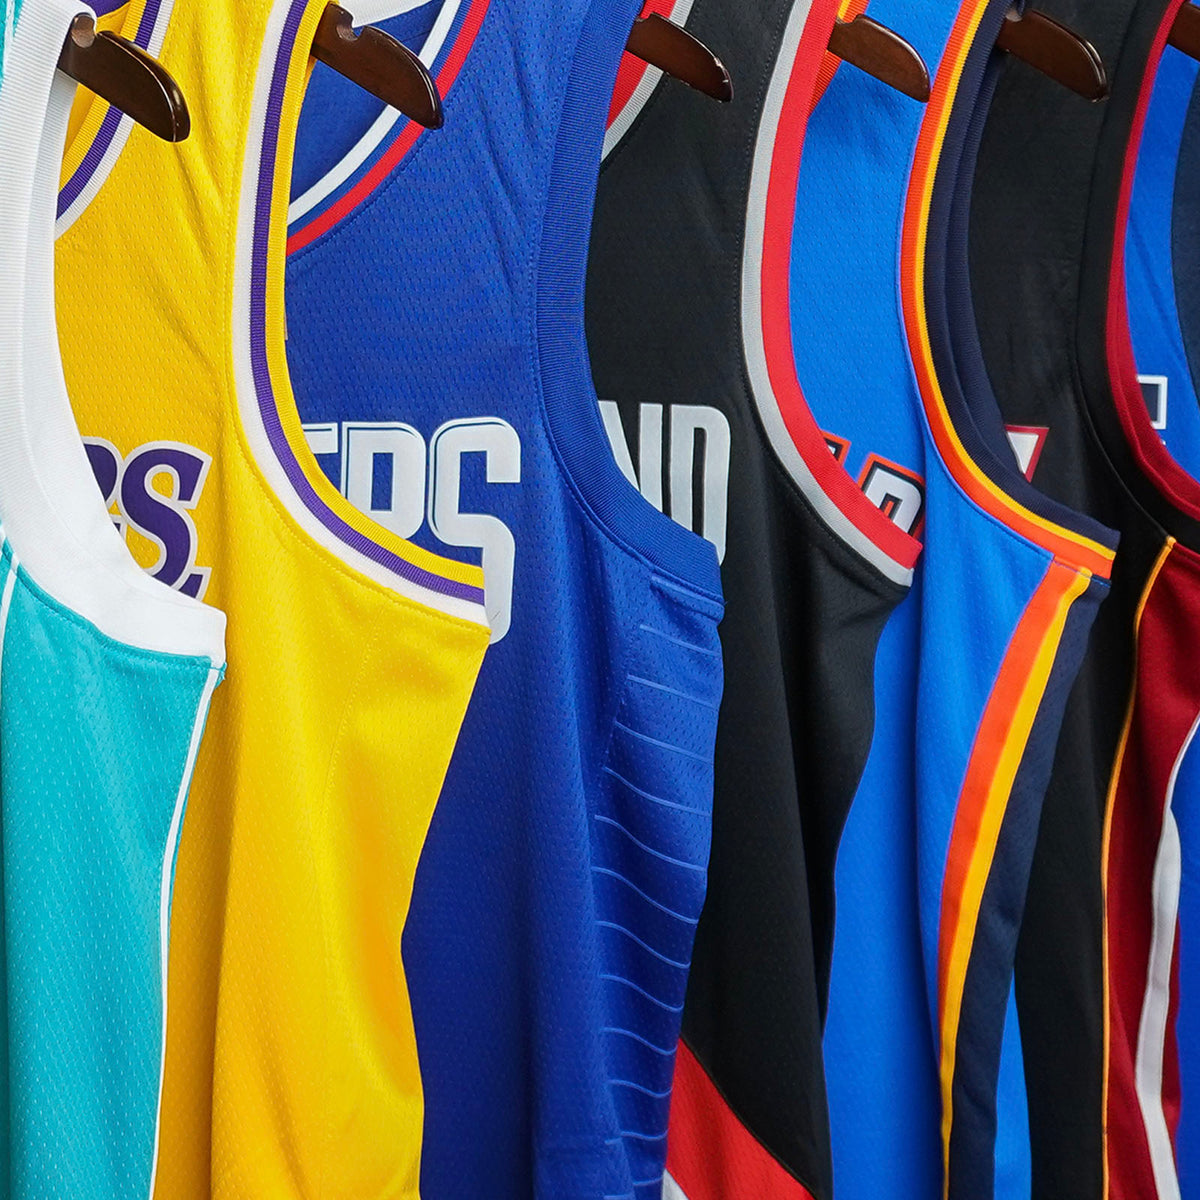 Buy Philadelphia 76ers Jerseys & Merchandise Australia